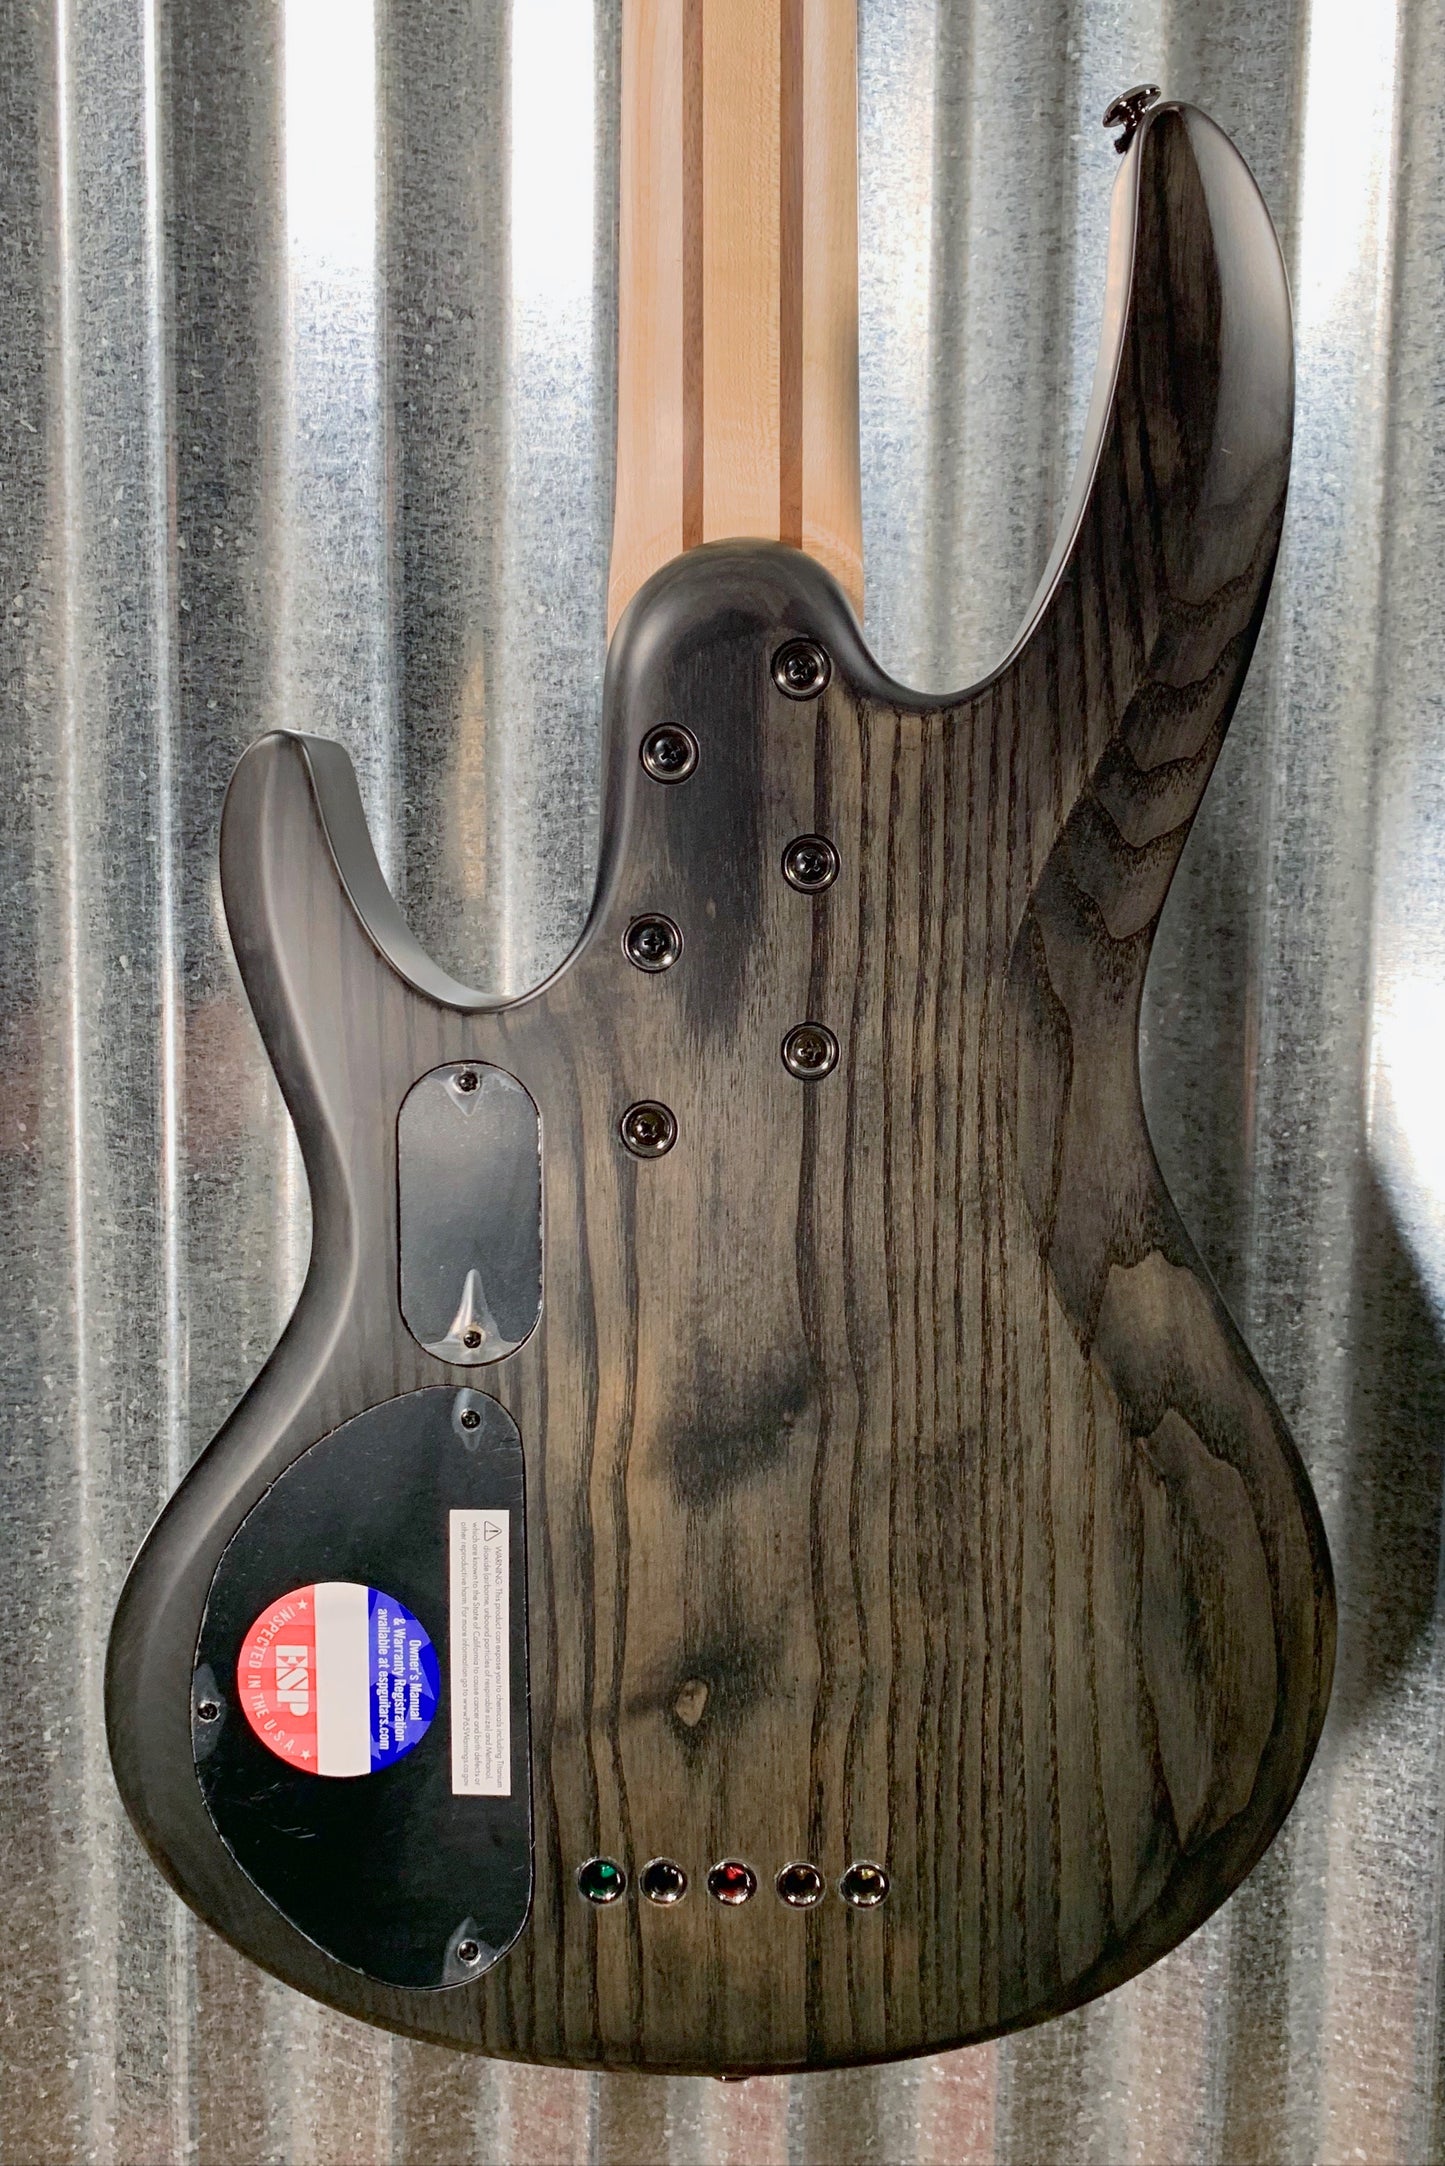 ESP LTD LB-205 Spalted Maple Satin 5 String Seymour Duncan Bass & Case LB205SMSTBLKS #0042 Demo